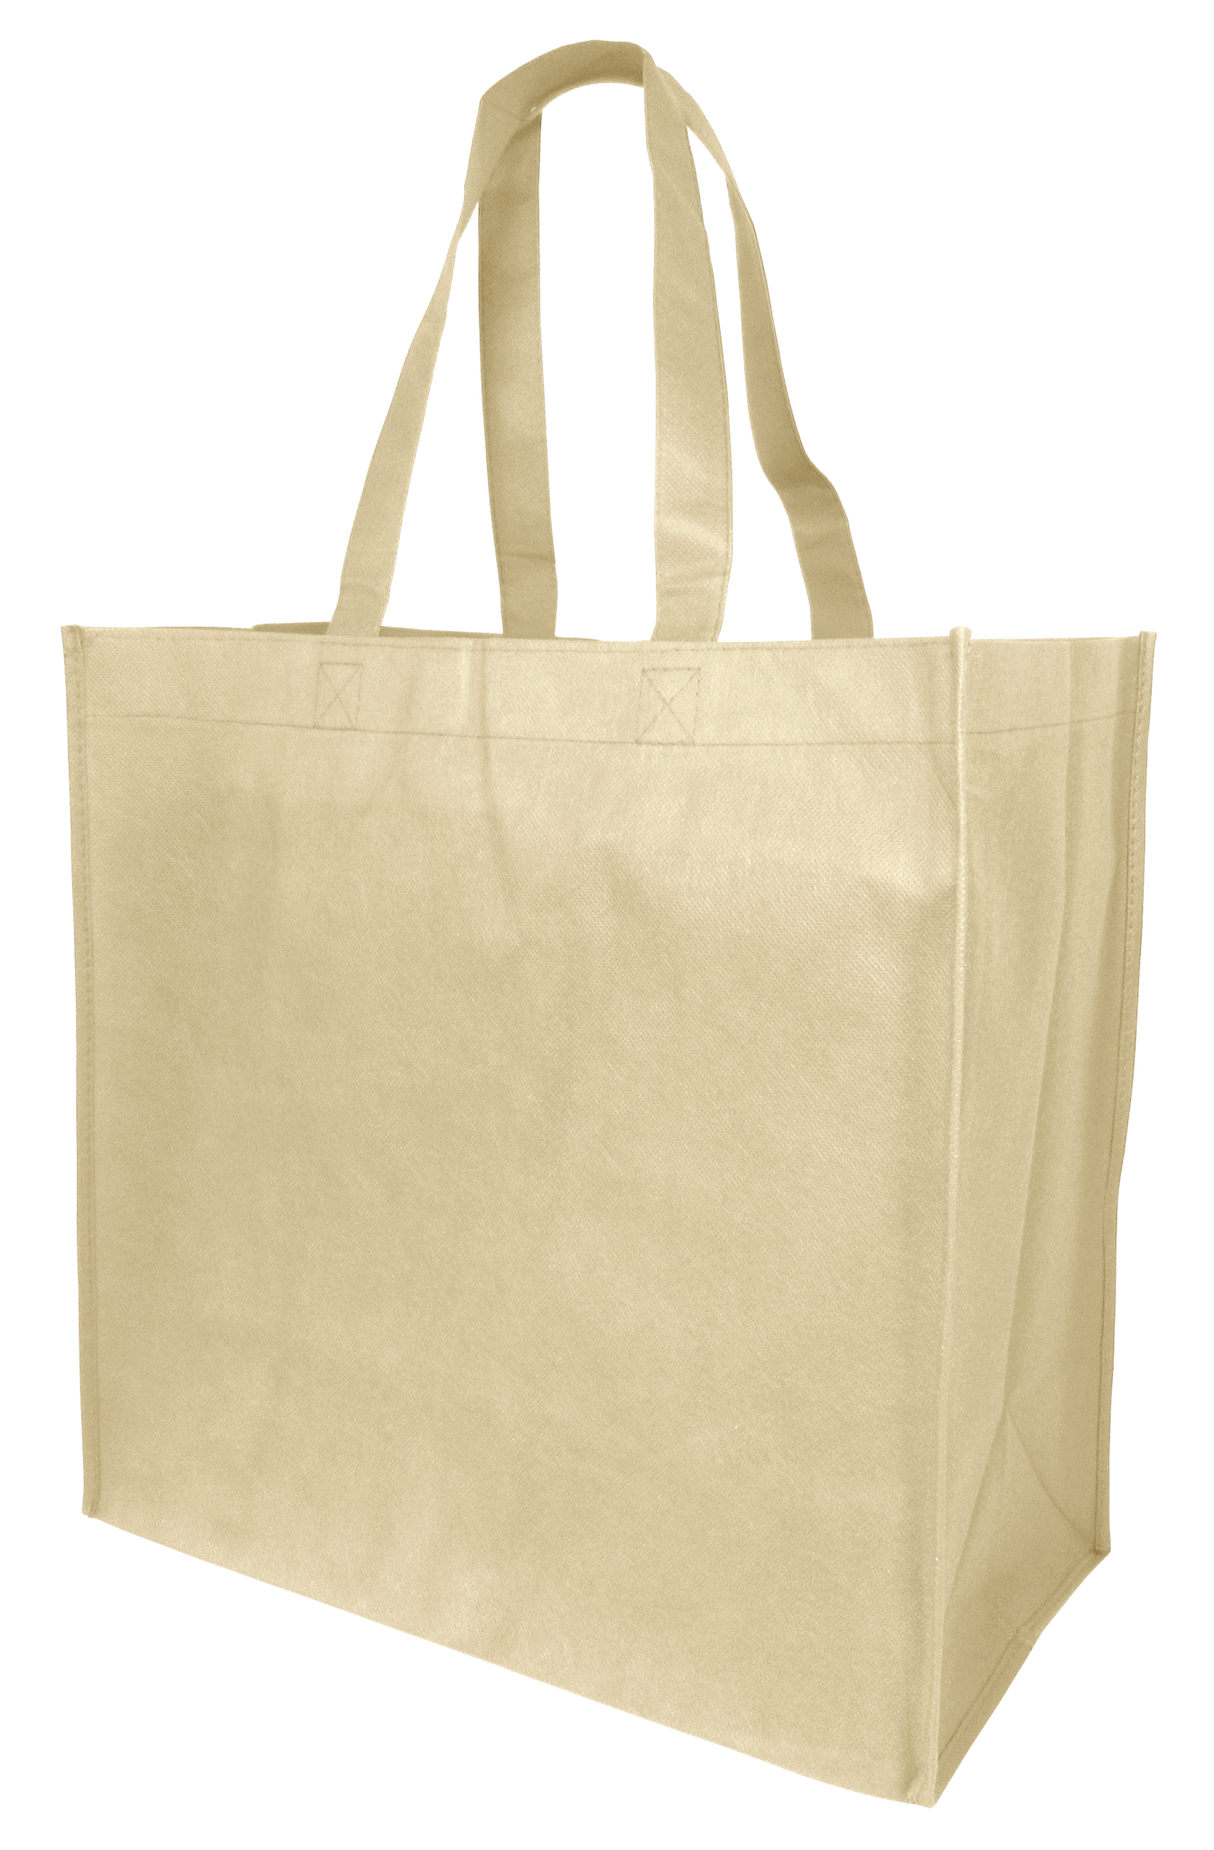 Jumbo Promotional Tote Bags khaki